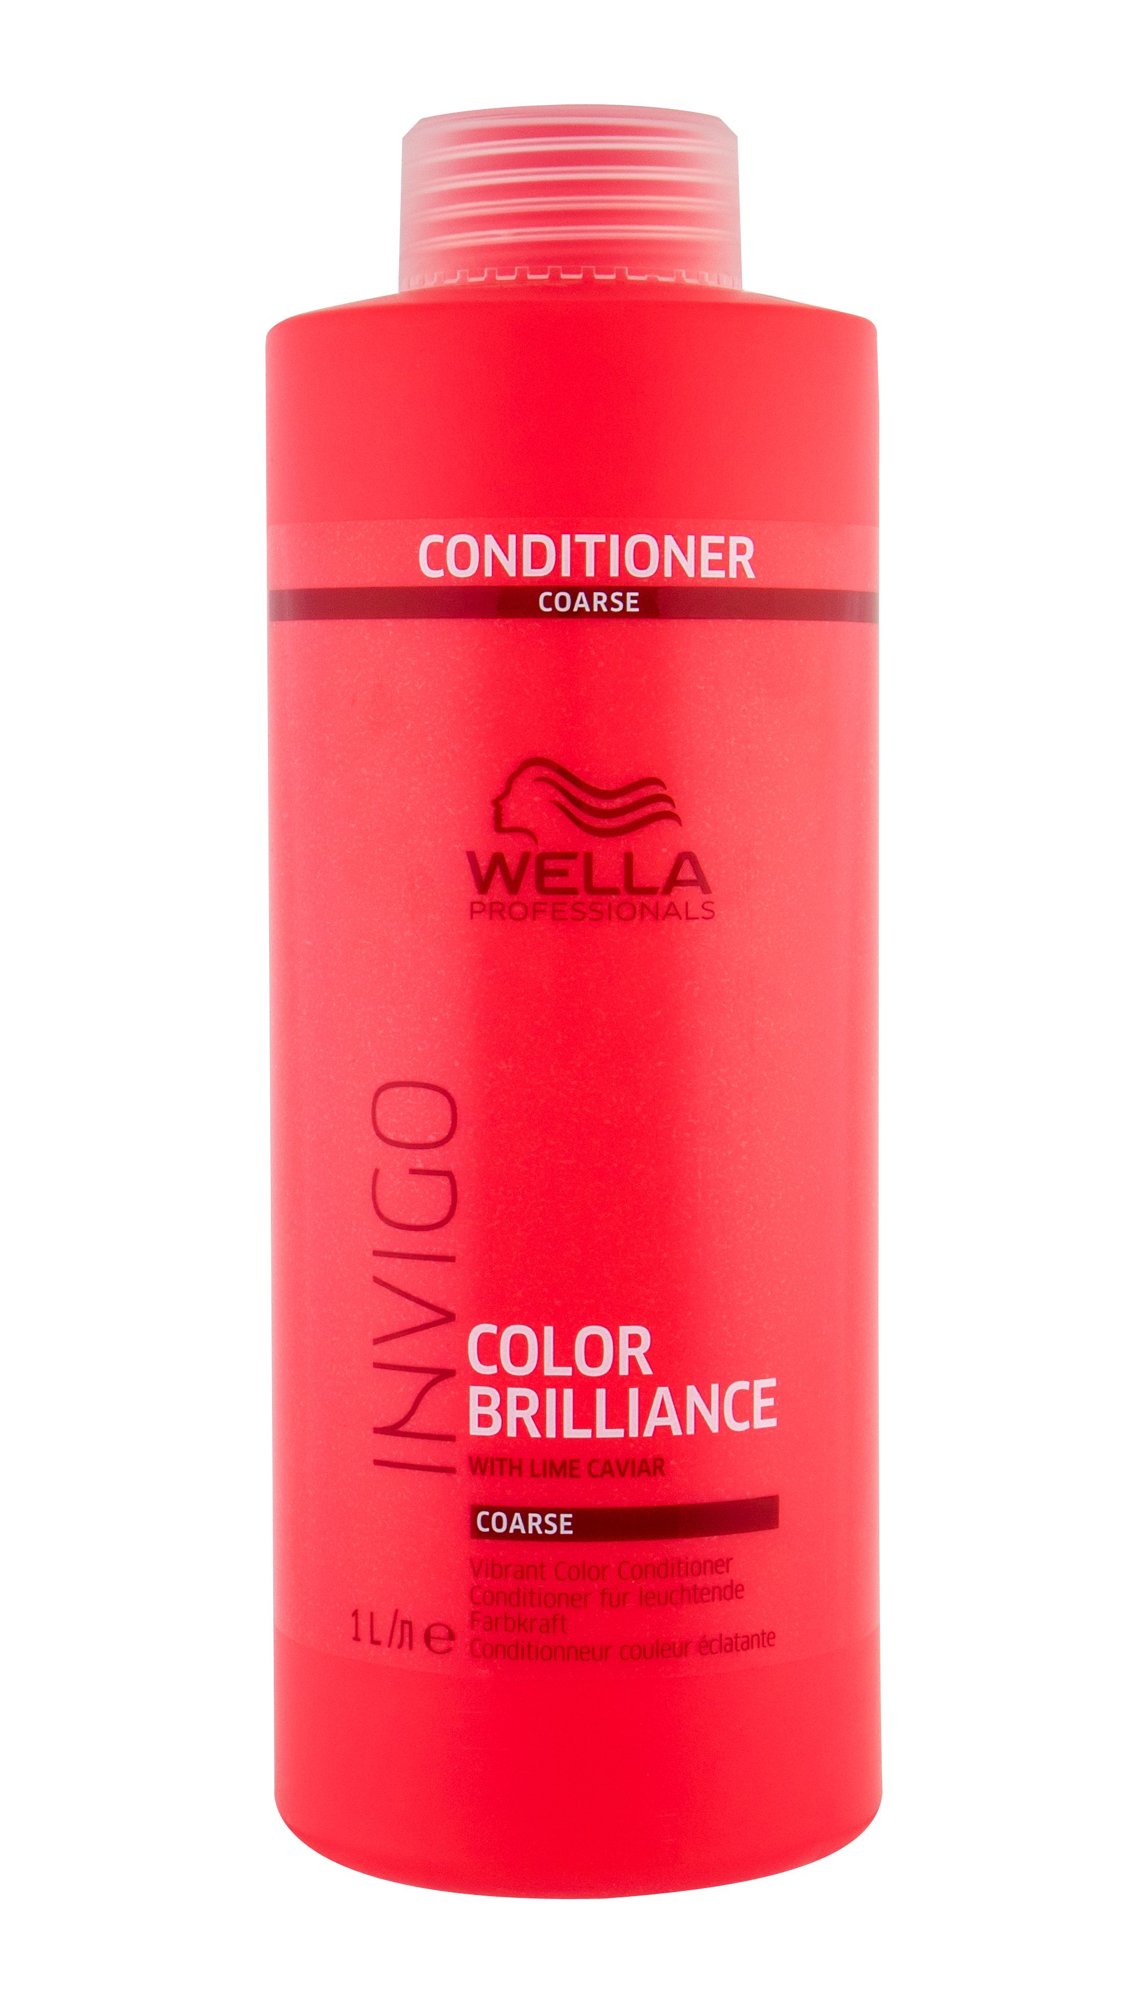 Wella Invigo Color Brilliance 1000ml kondicionierius